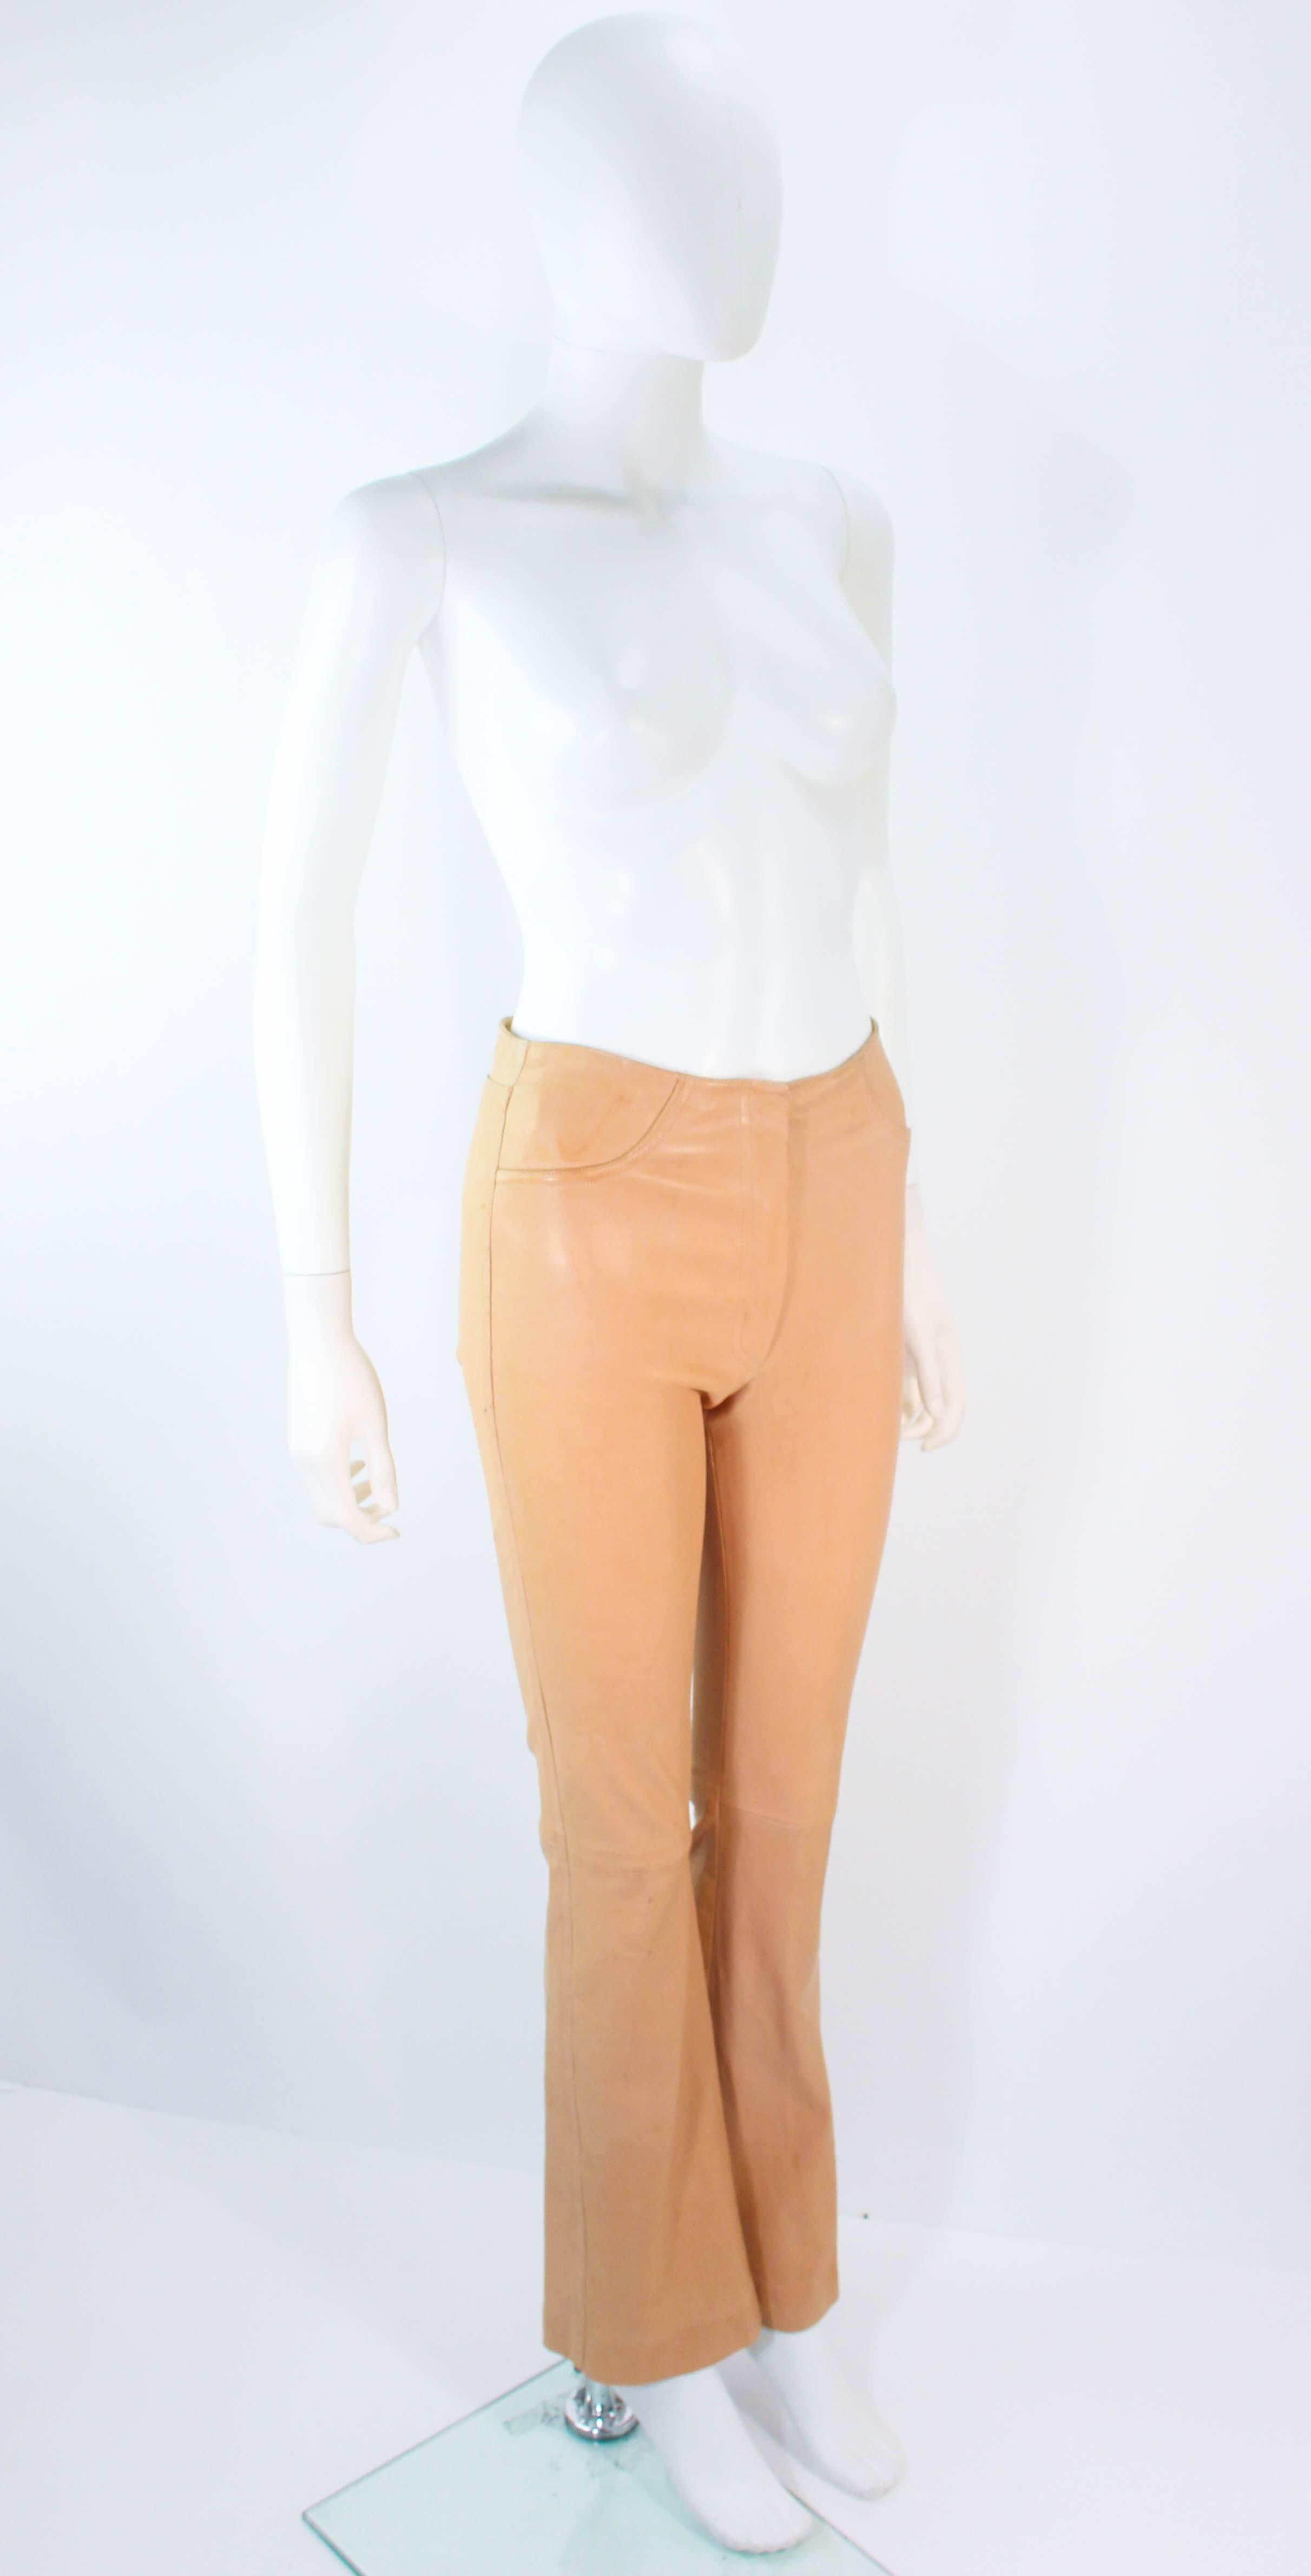 Orange JEAN CLAUDE JITROIS Vintage Stretch Nude Leather Pants Size 0 2 38